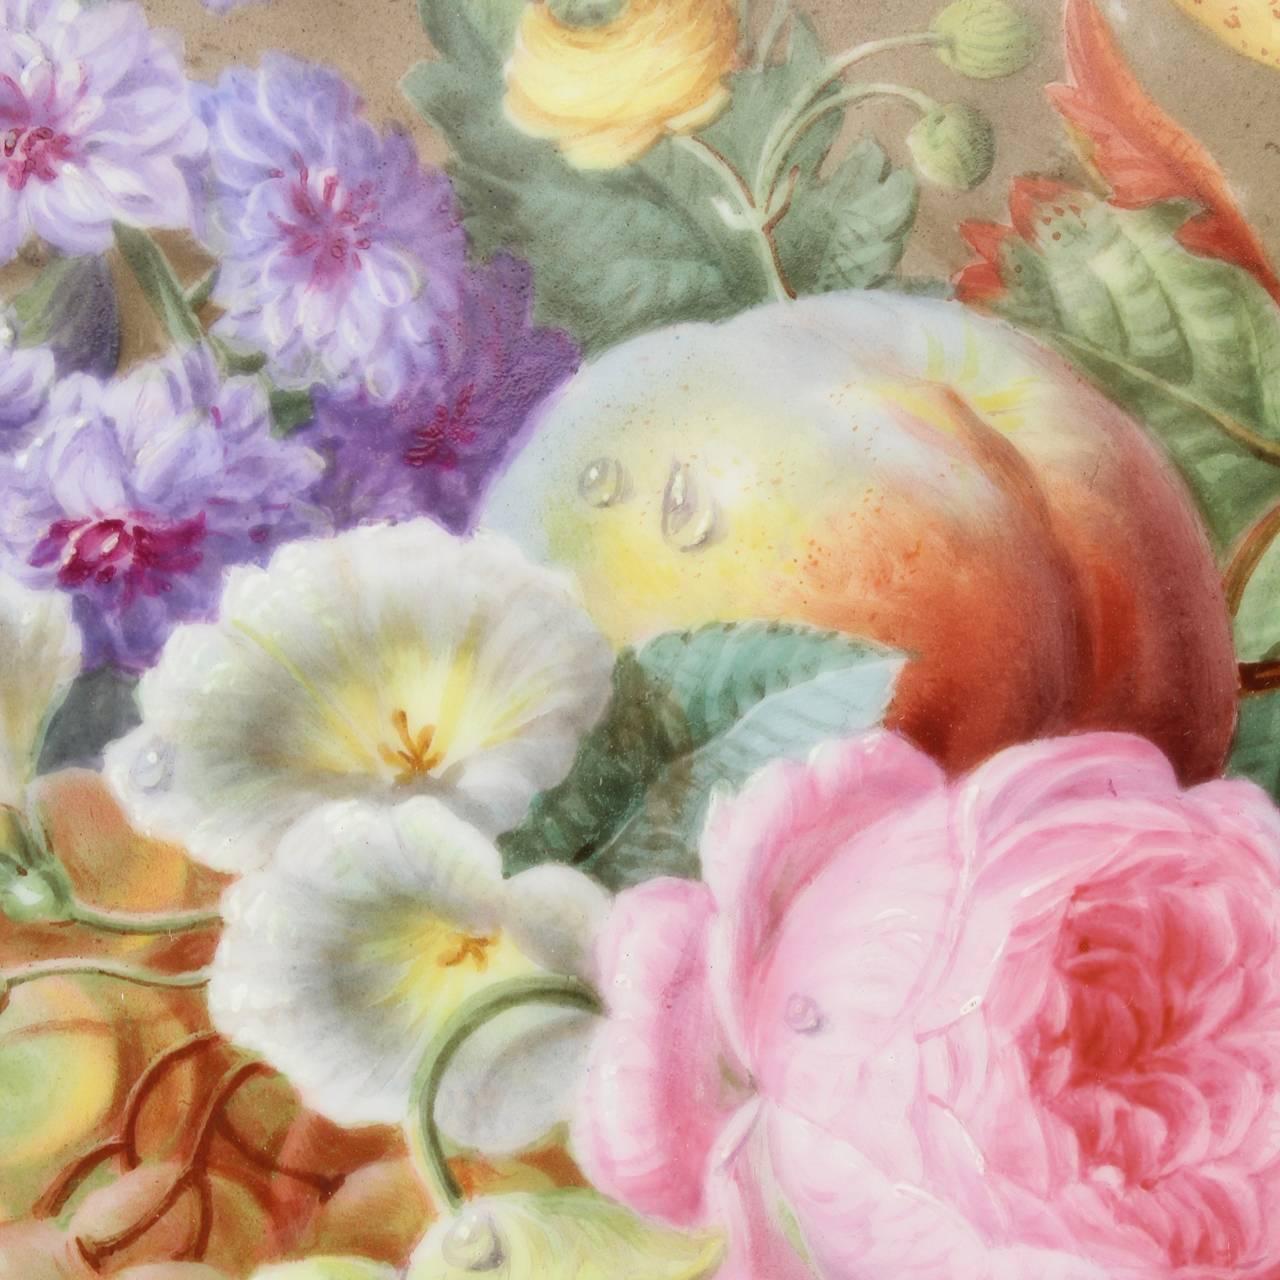 Large Antique English Porcelain Plaque of Fruit, Flowers & a Bird, 19th Century 2